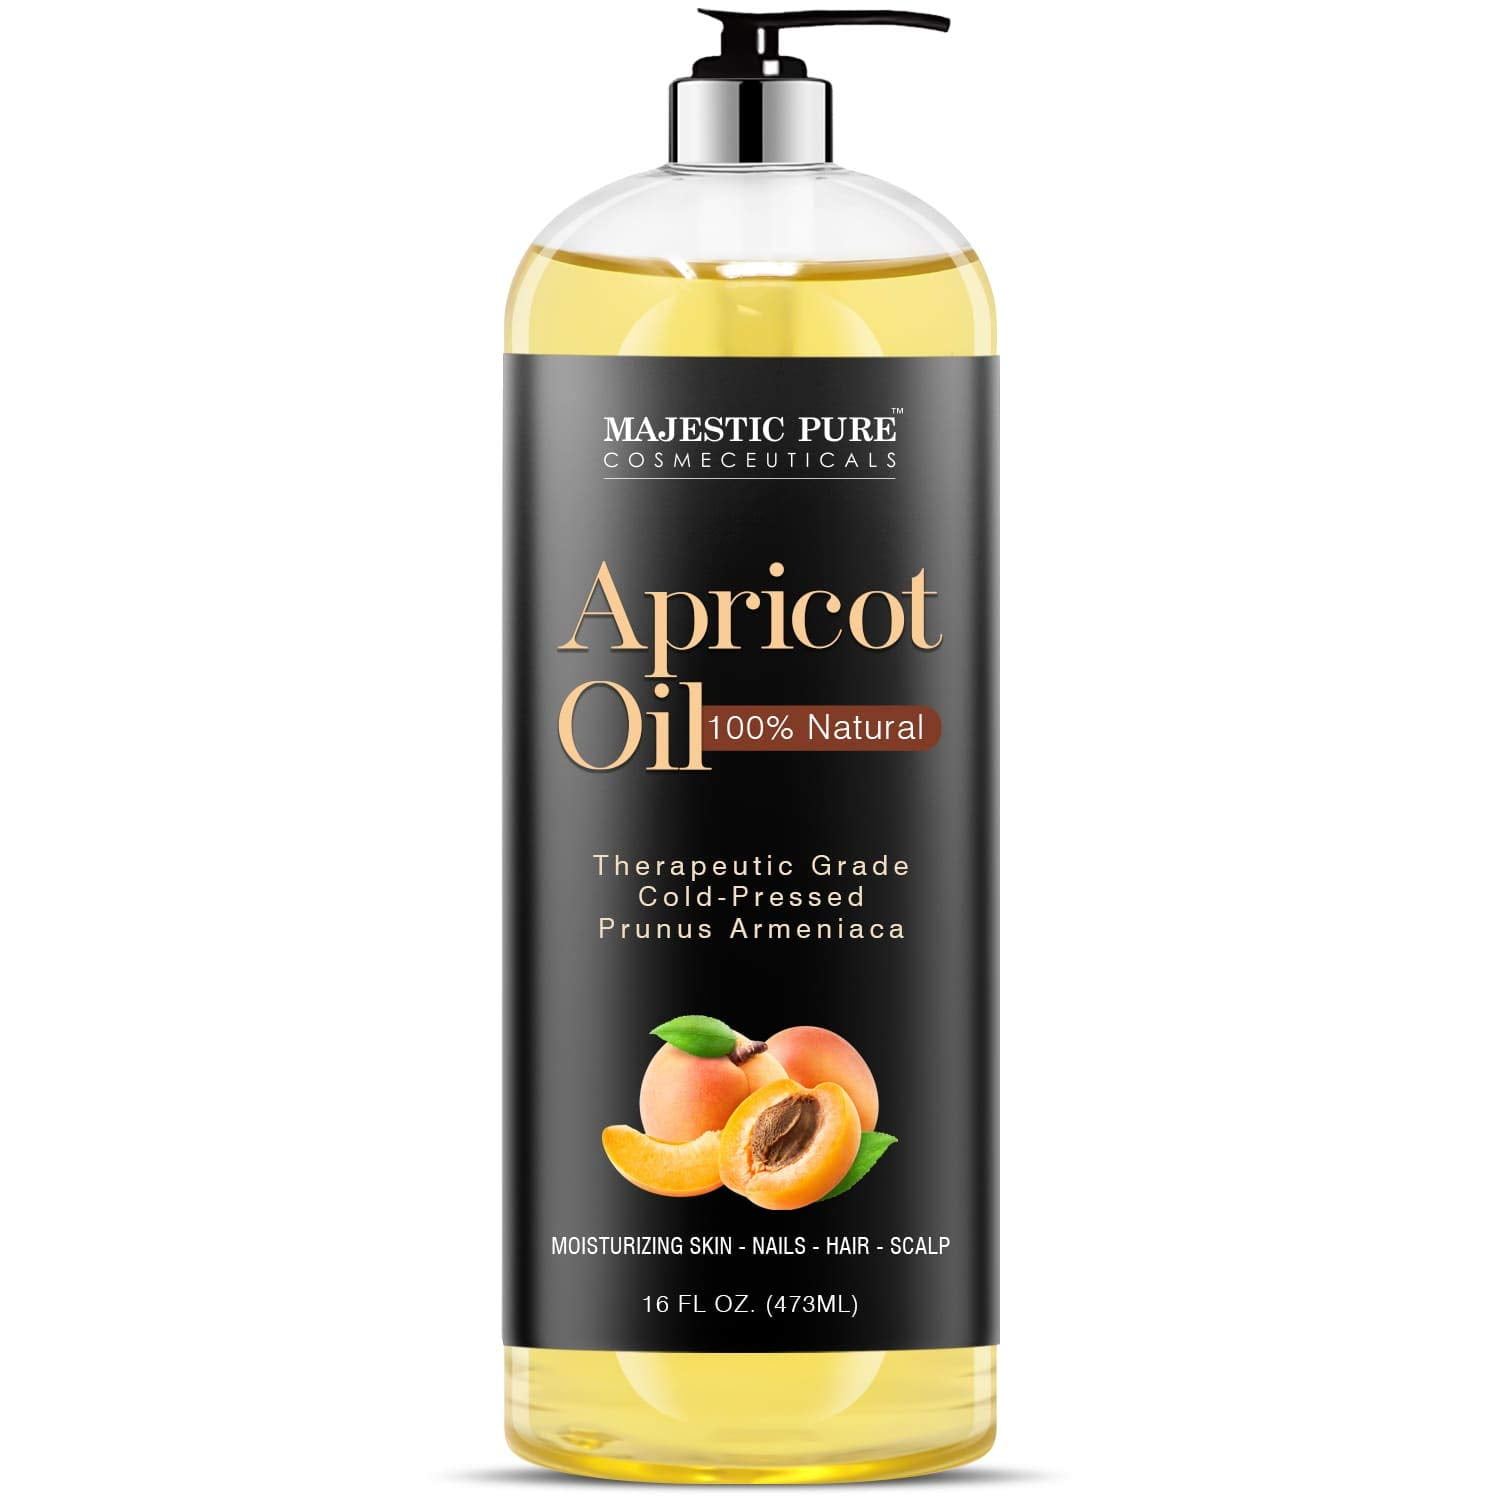 Apricot Oil by NY Spice Shop